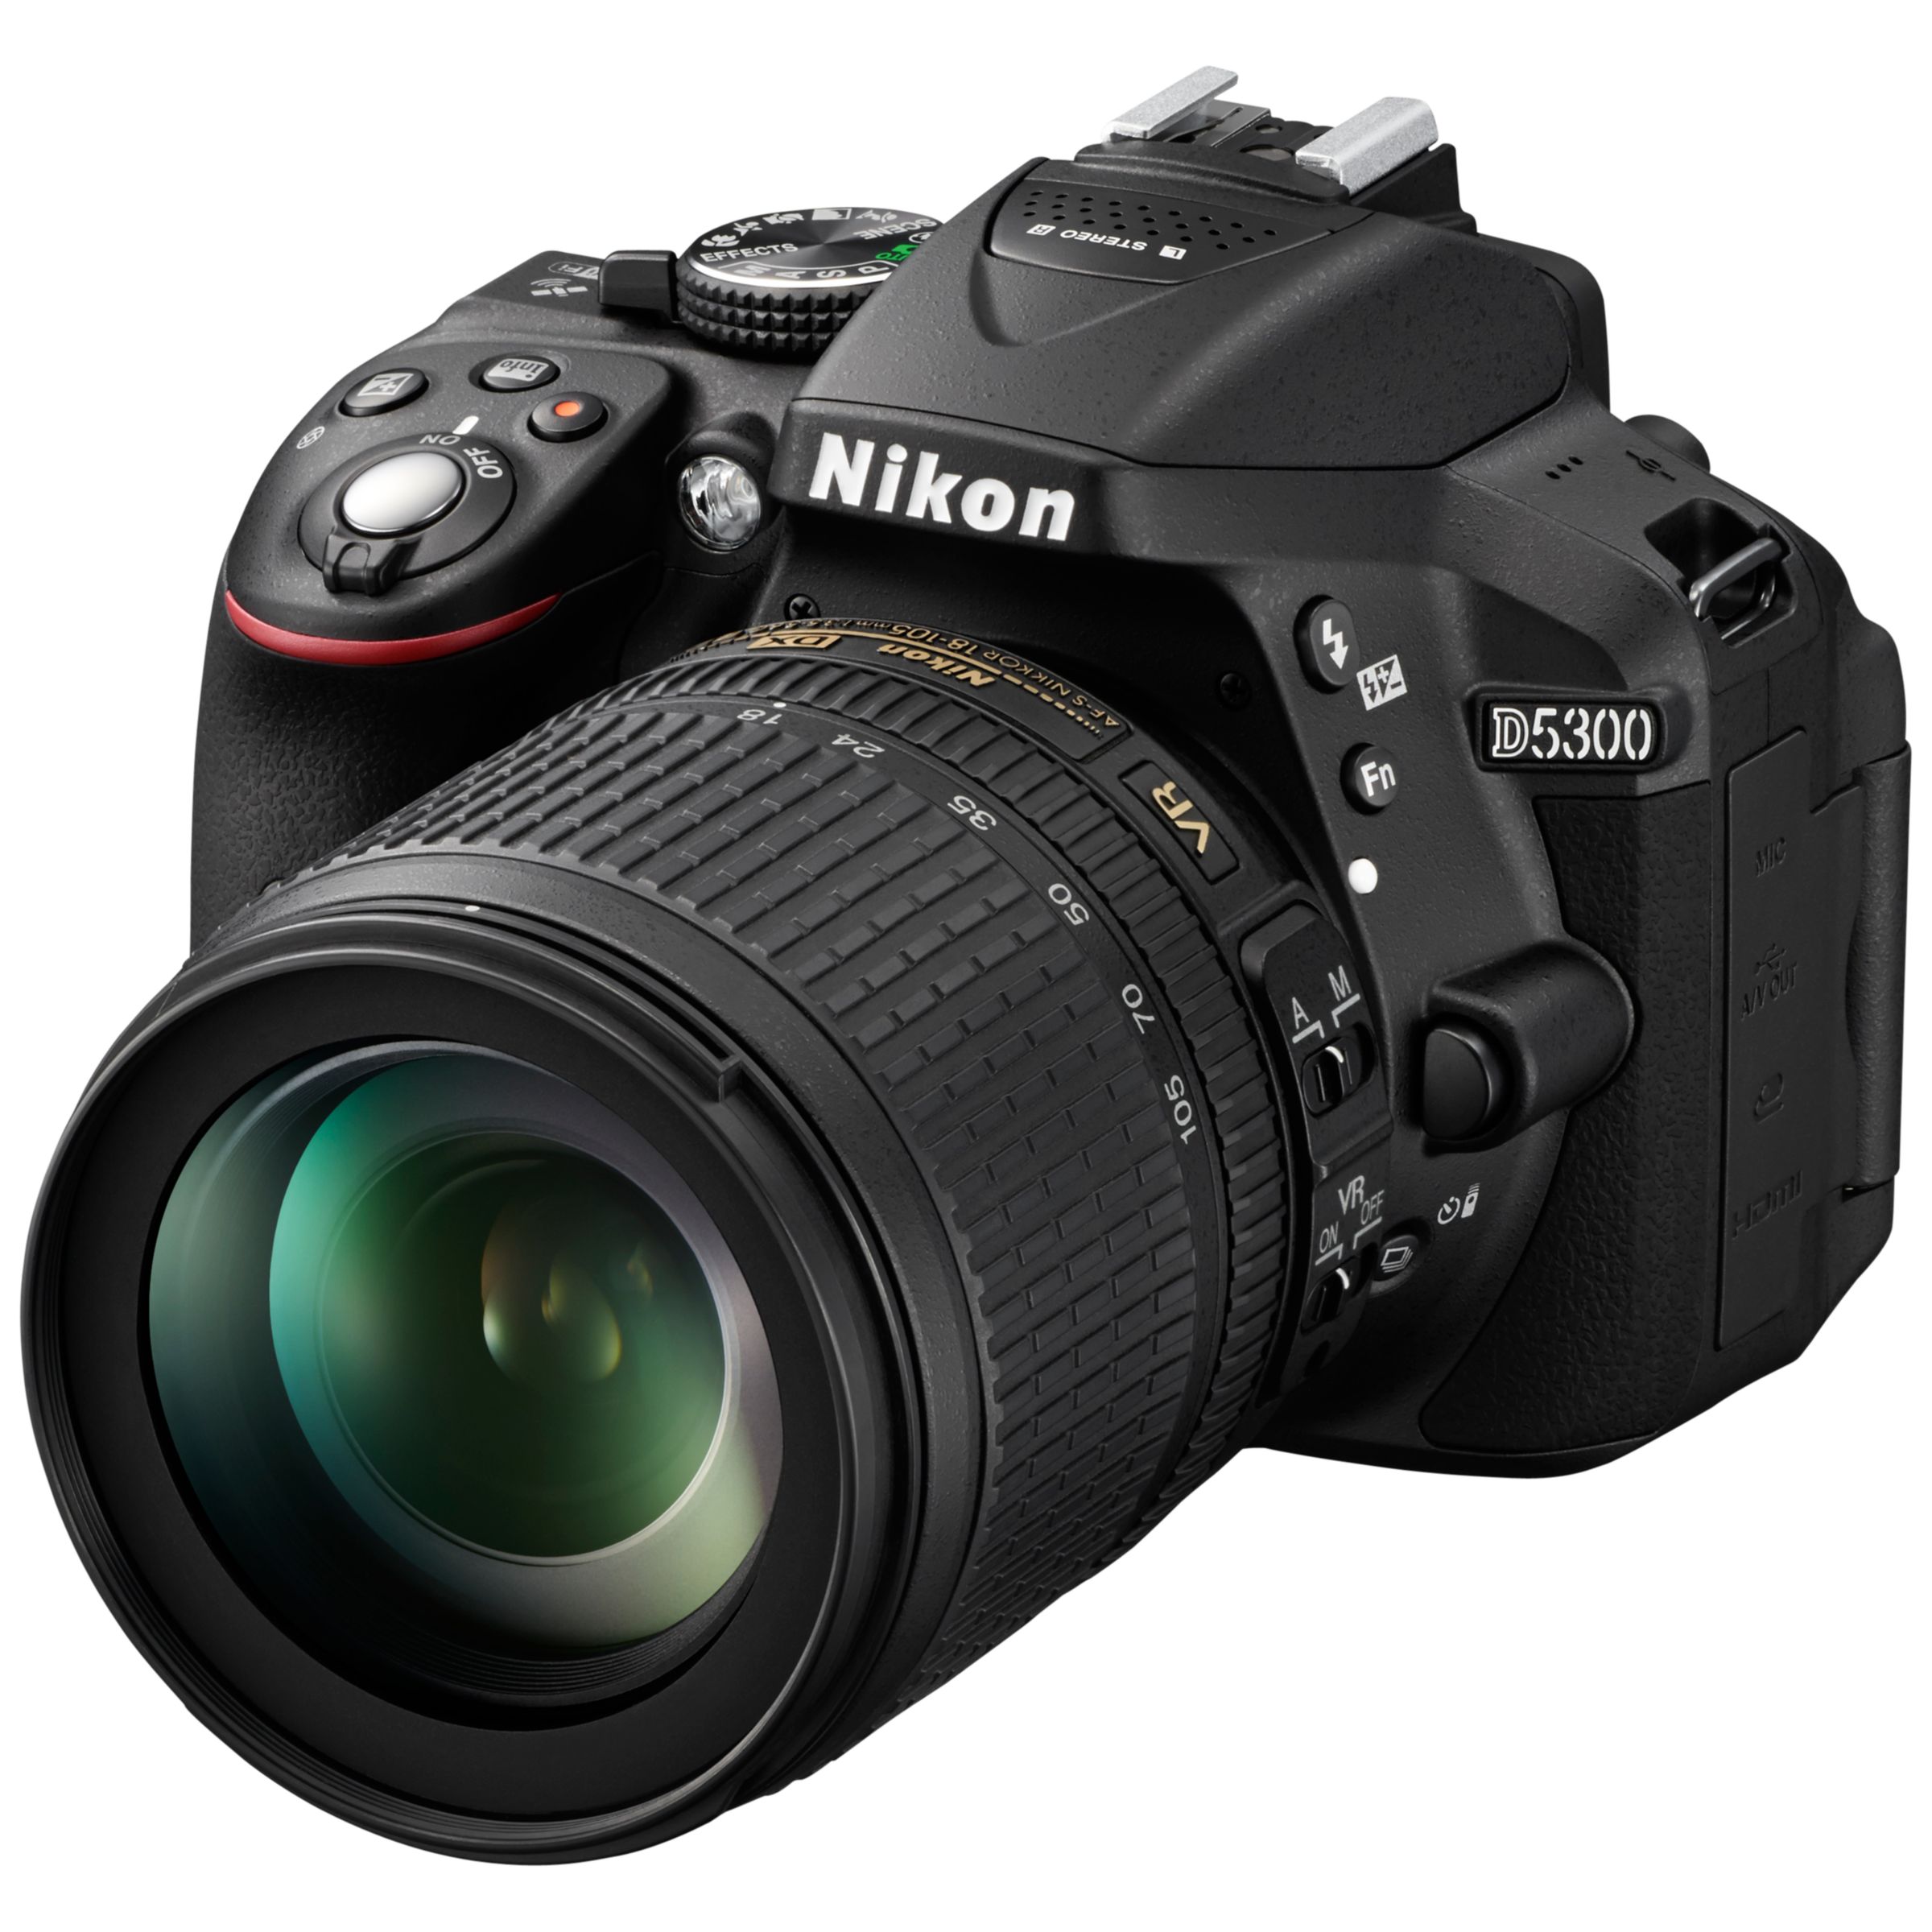 Nikon D5300 Digital SLR Camera with 18-105mm VR Zoom Lens, HD 1080p, 24.2MP, Wi-Fi, 3.2" Screen